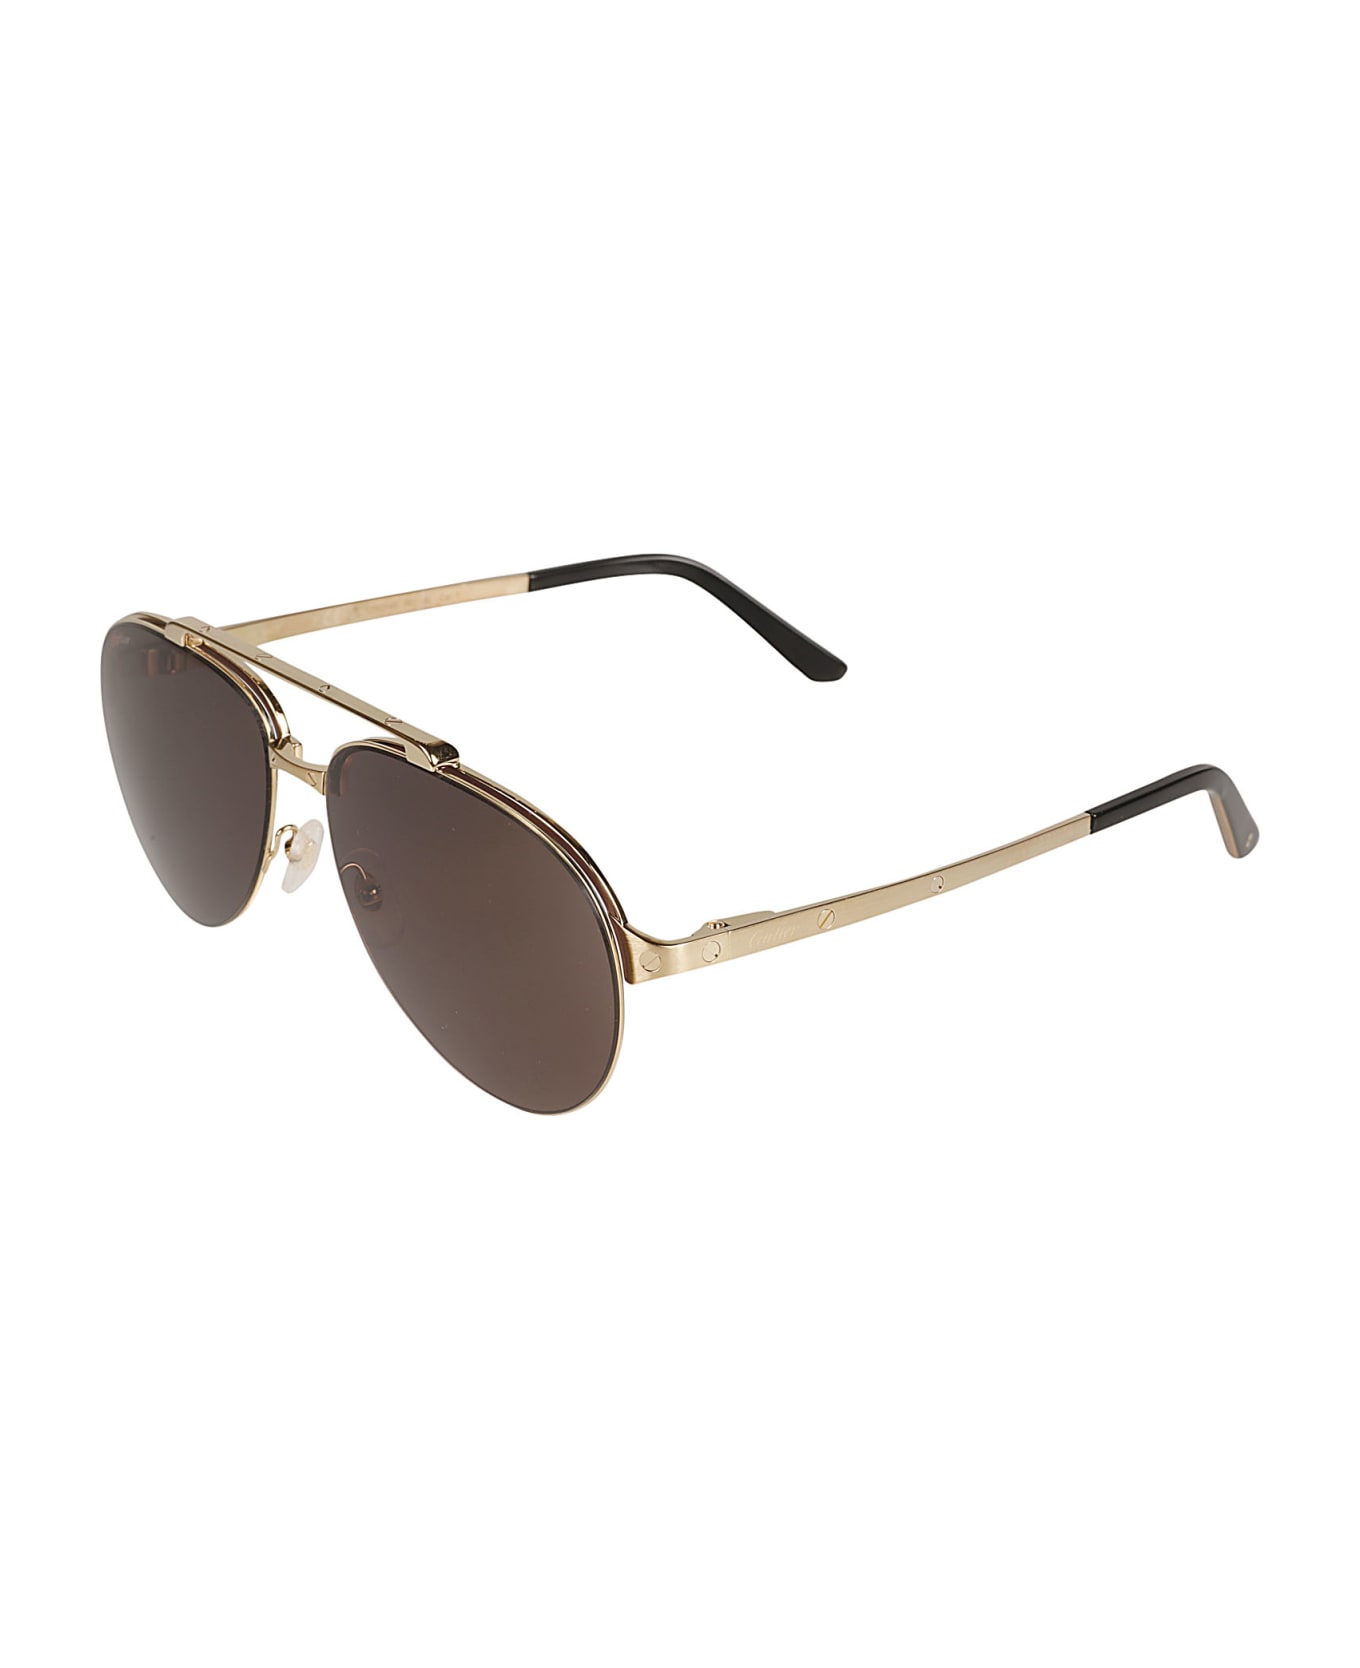 Cartier Eyewear Round Aviator Sunglasses - Gold/Grey